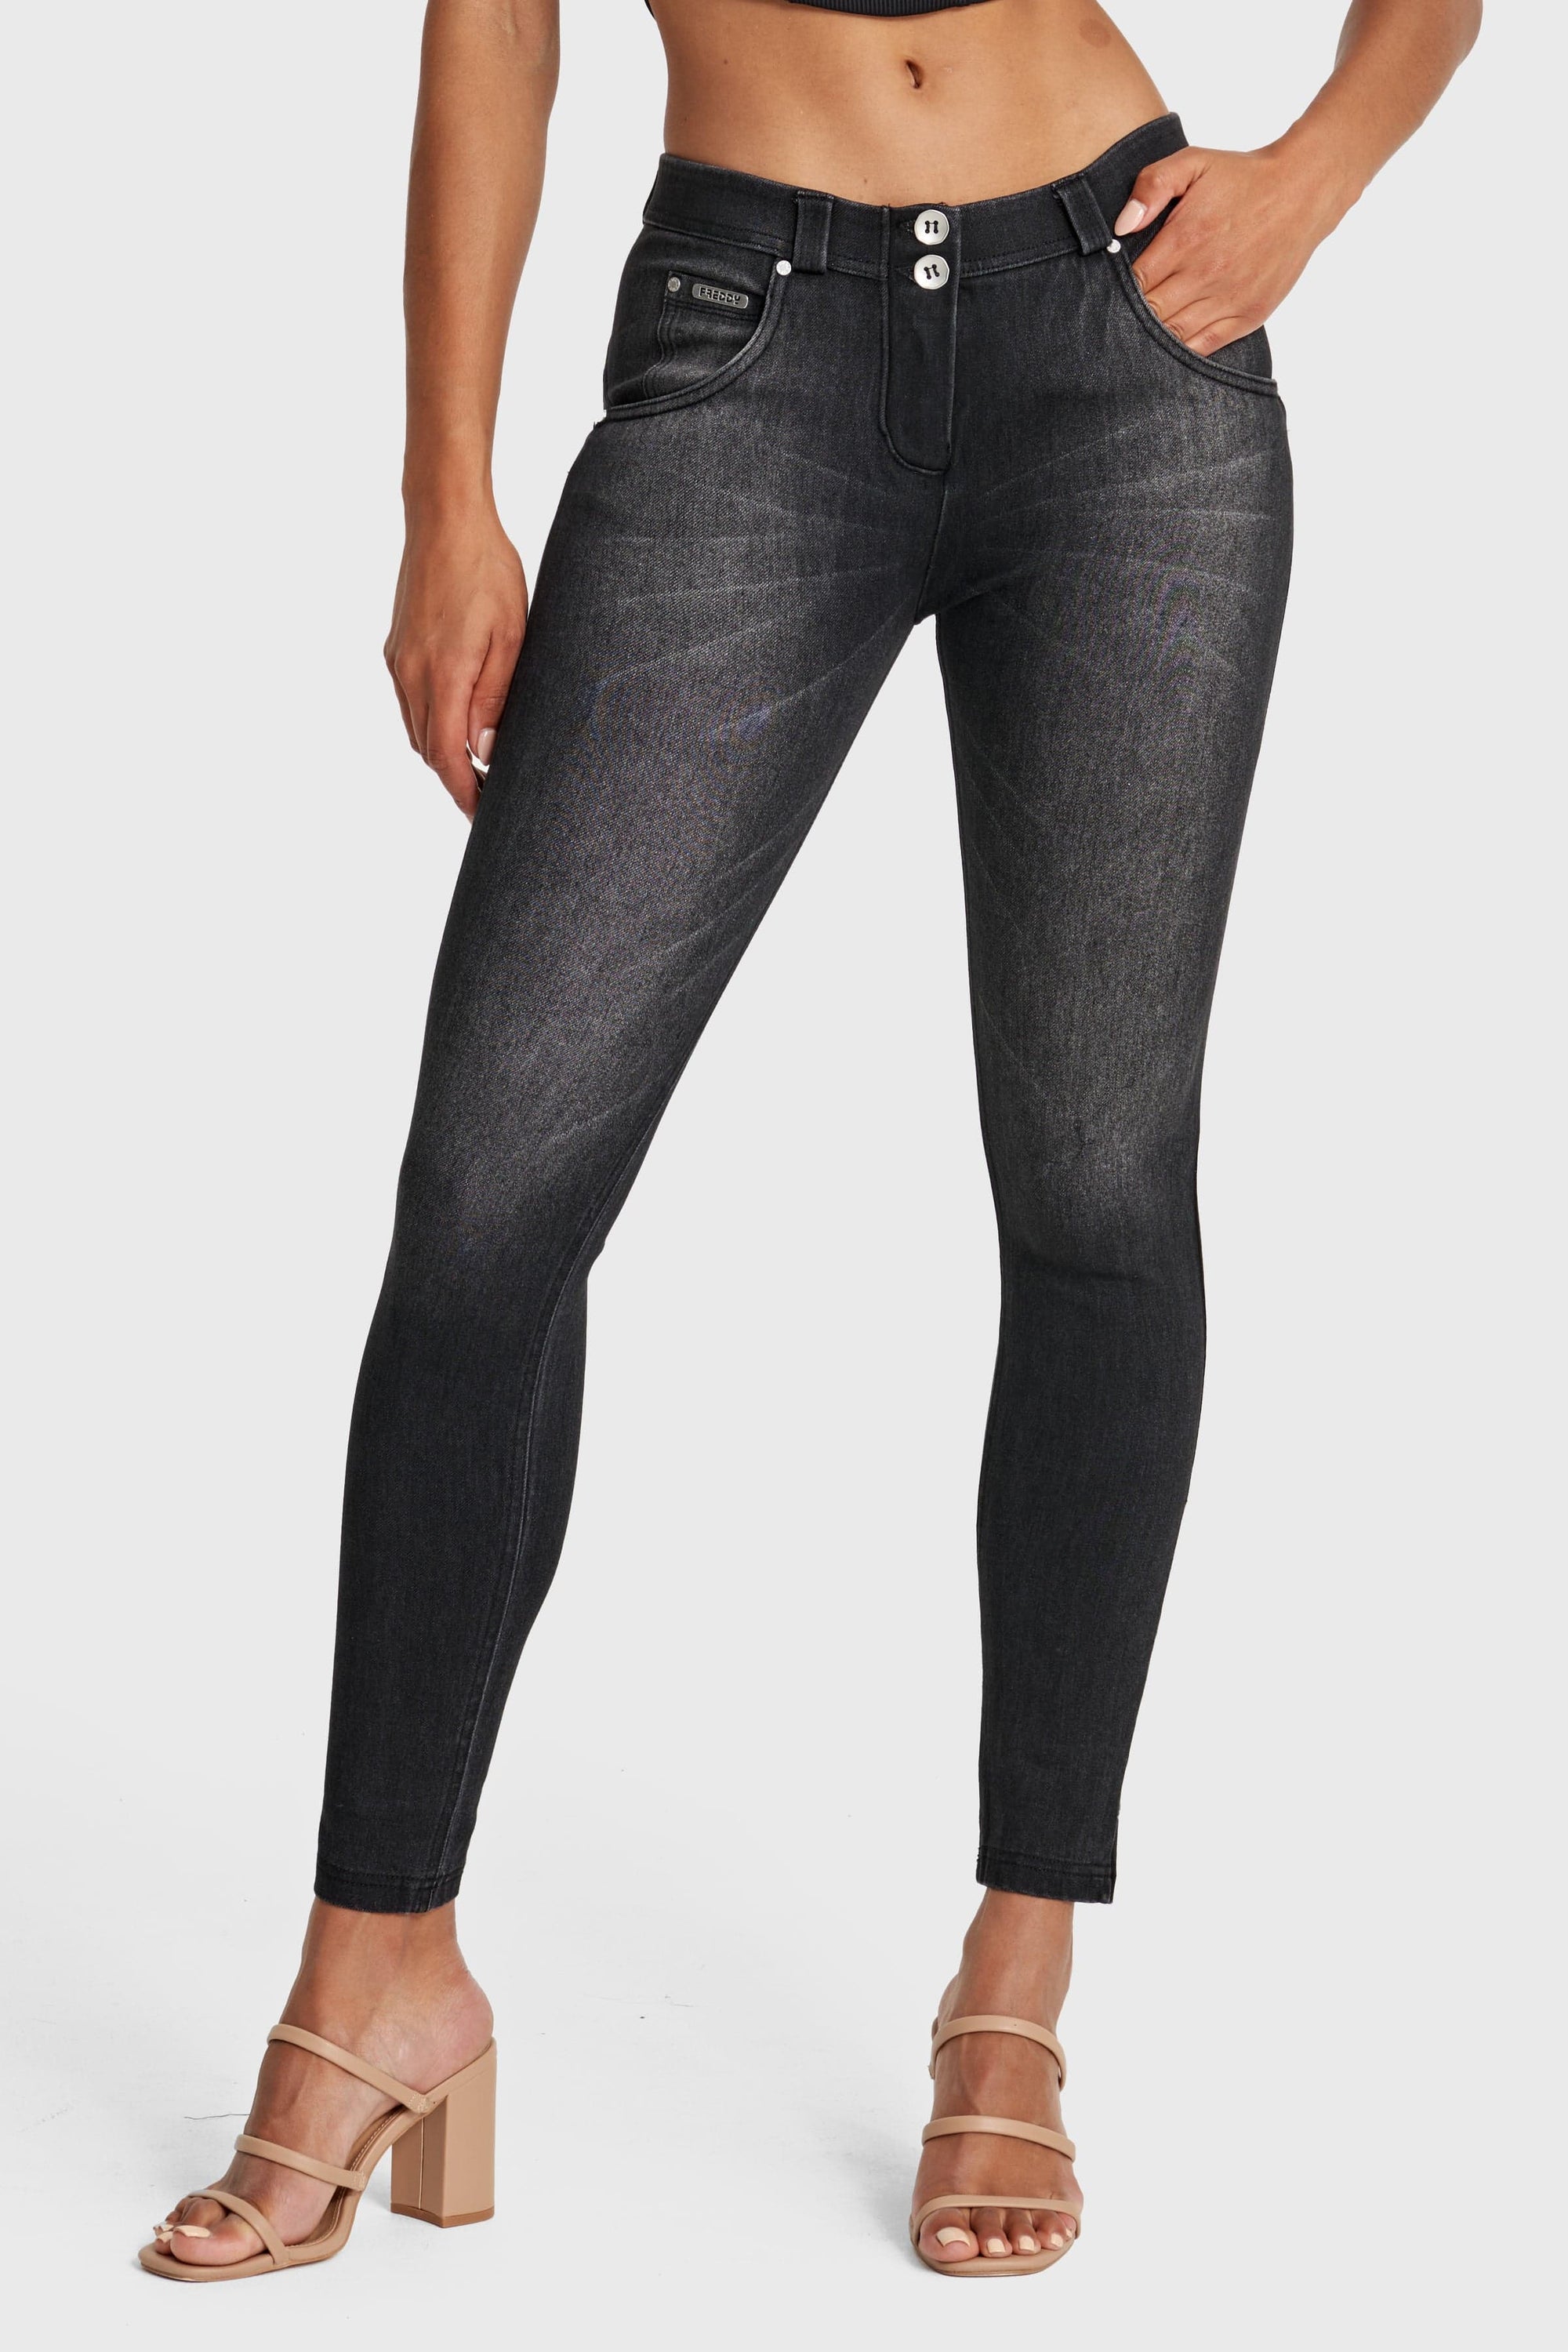 WR.UP® Snug Jeans - Mid Rise - Full Length - Black + Black Stitching 10